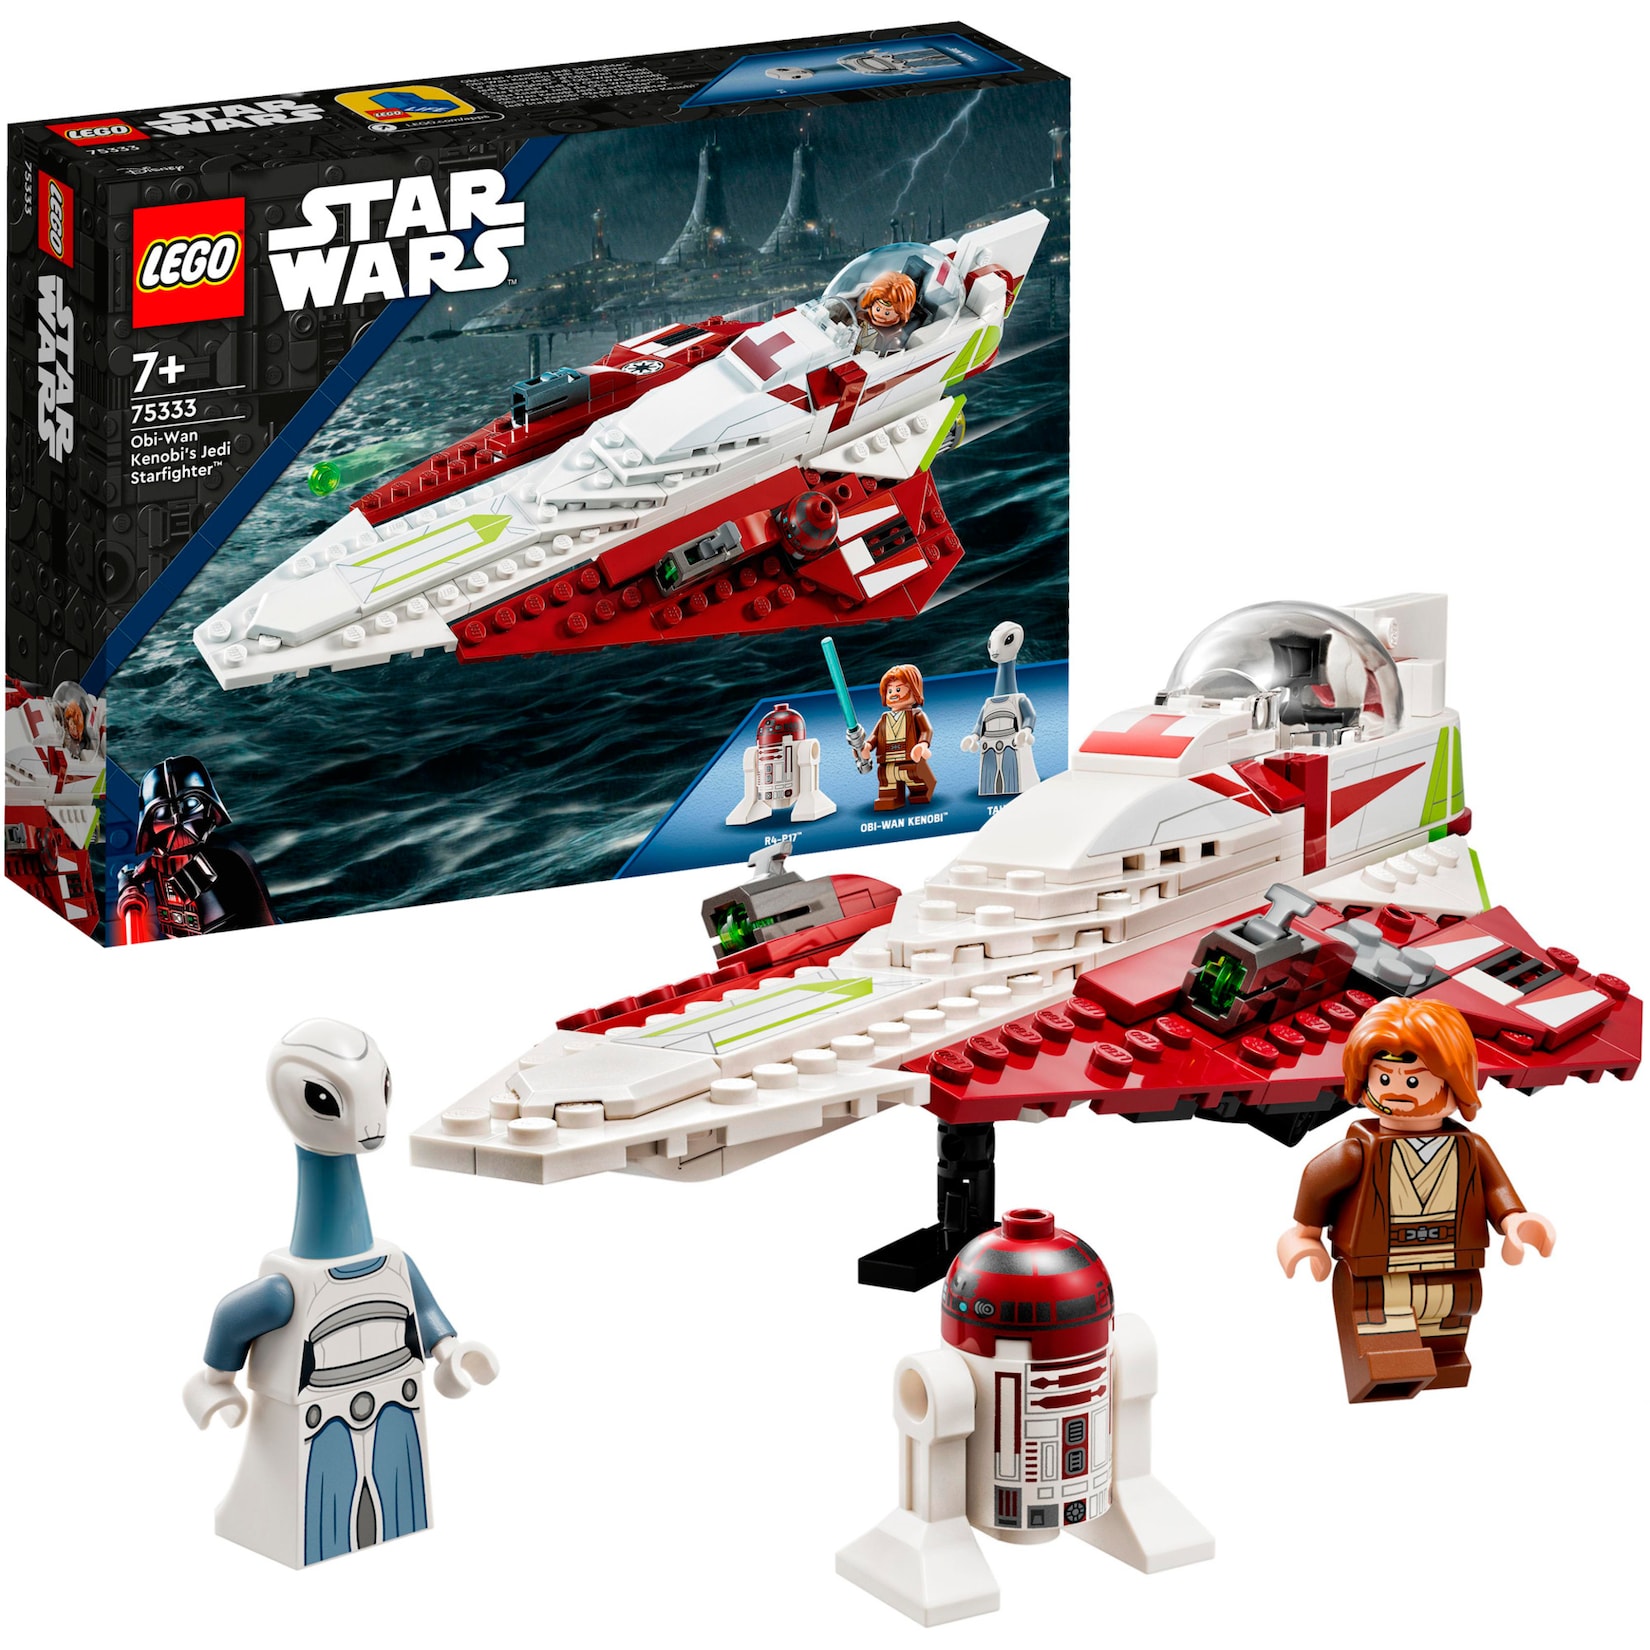 LEGO Konstruktionsspielzeug Star Wars Obi-Wan Kenobis Jedi Starfighter